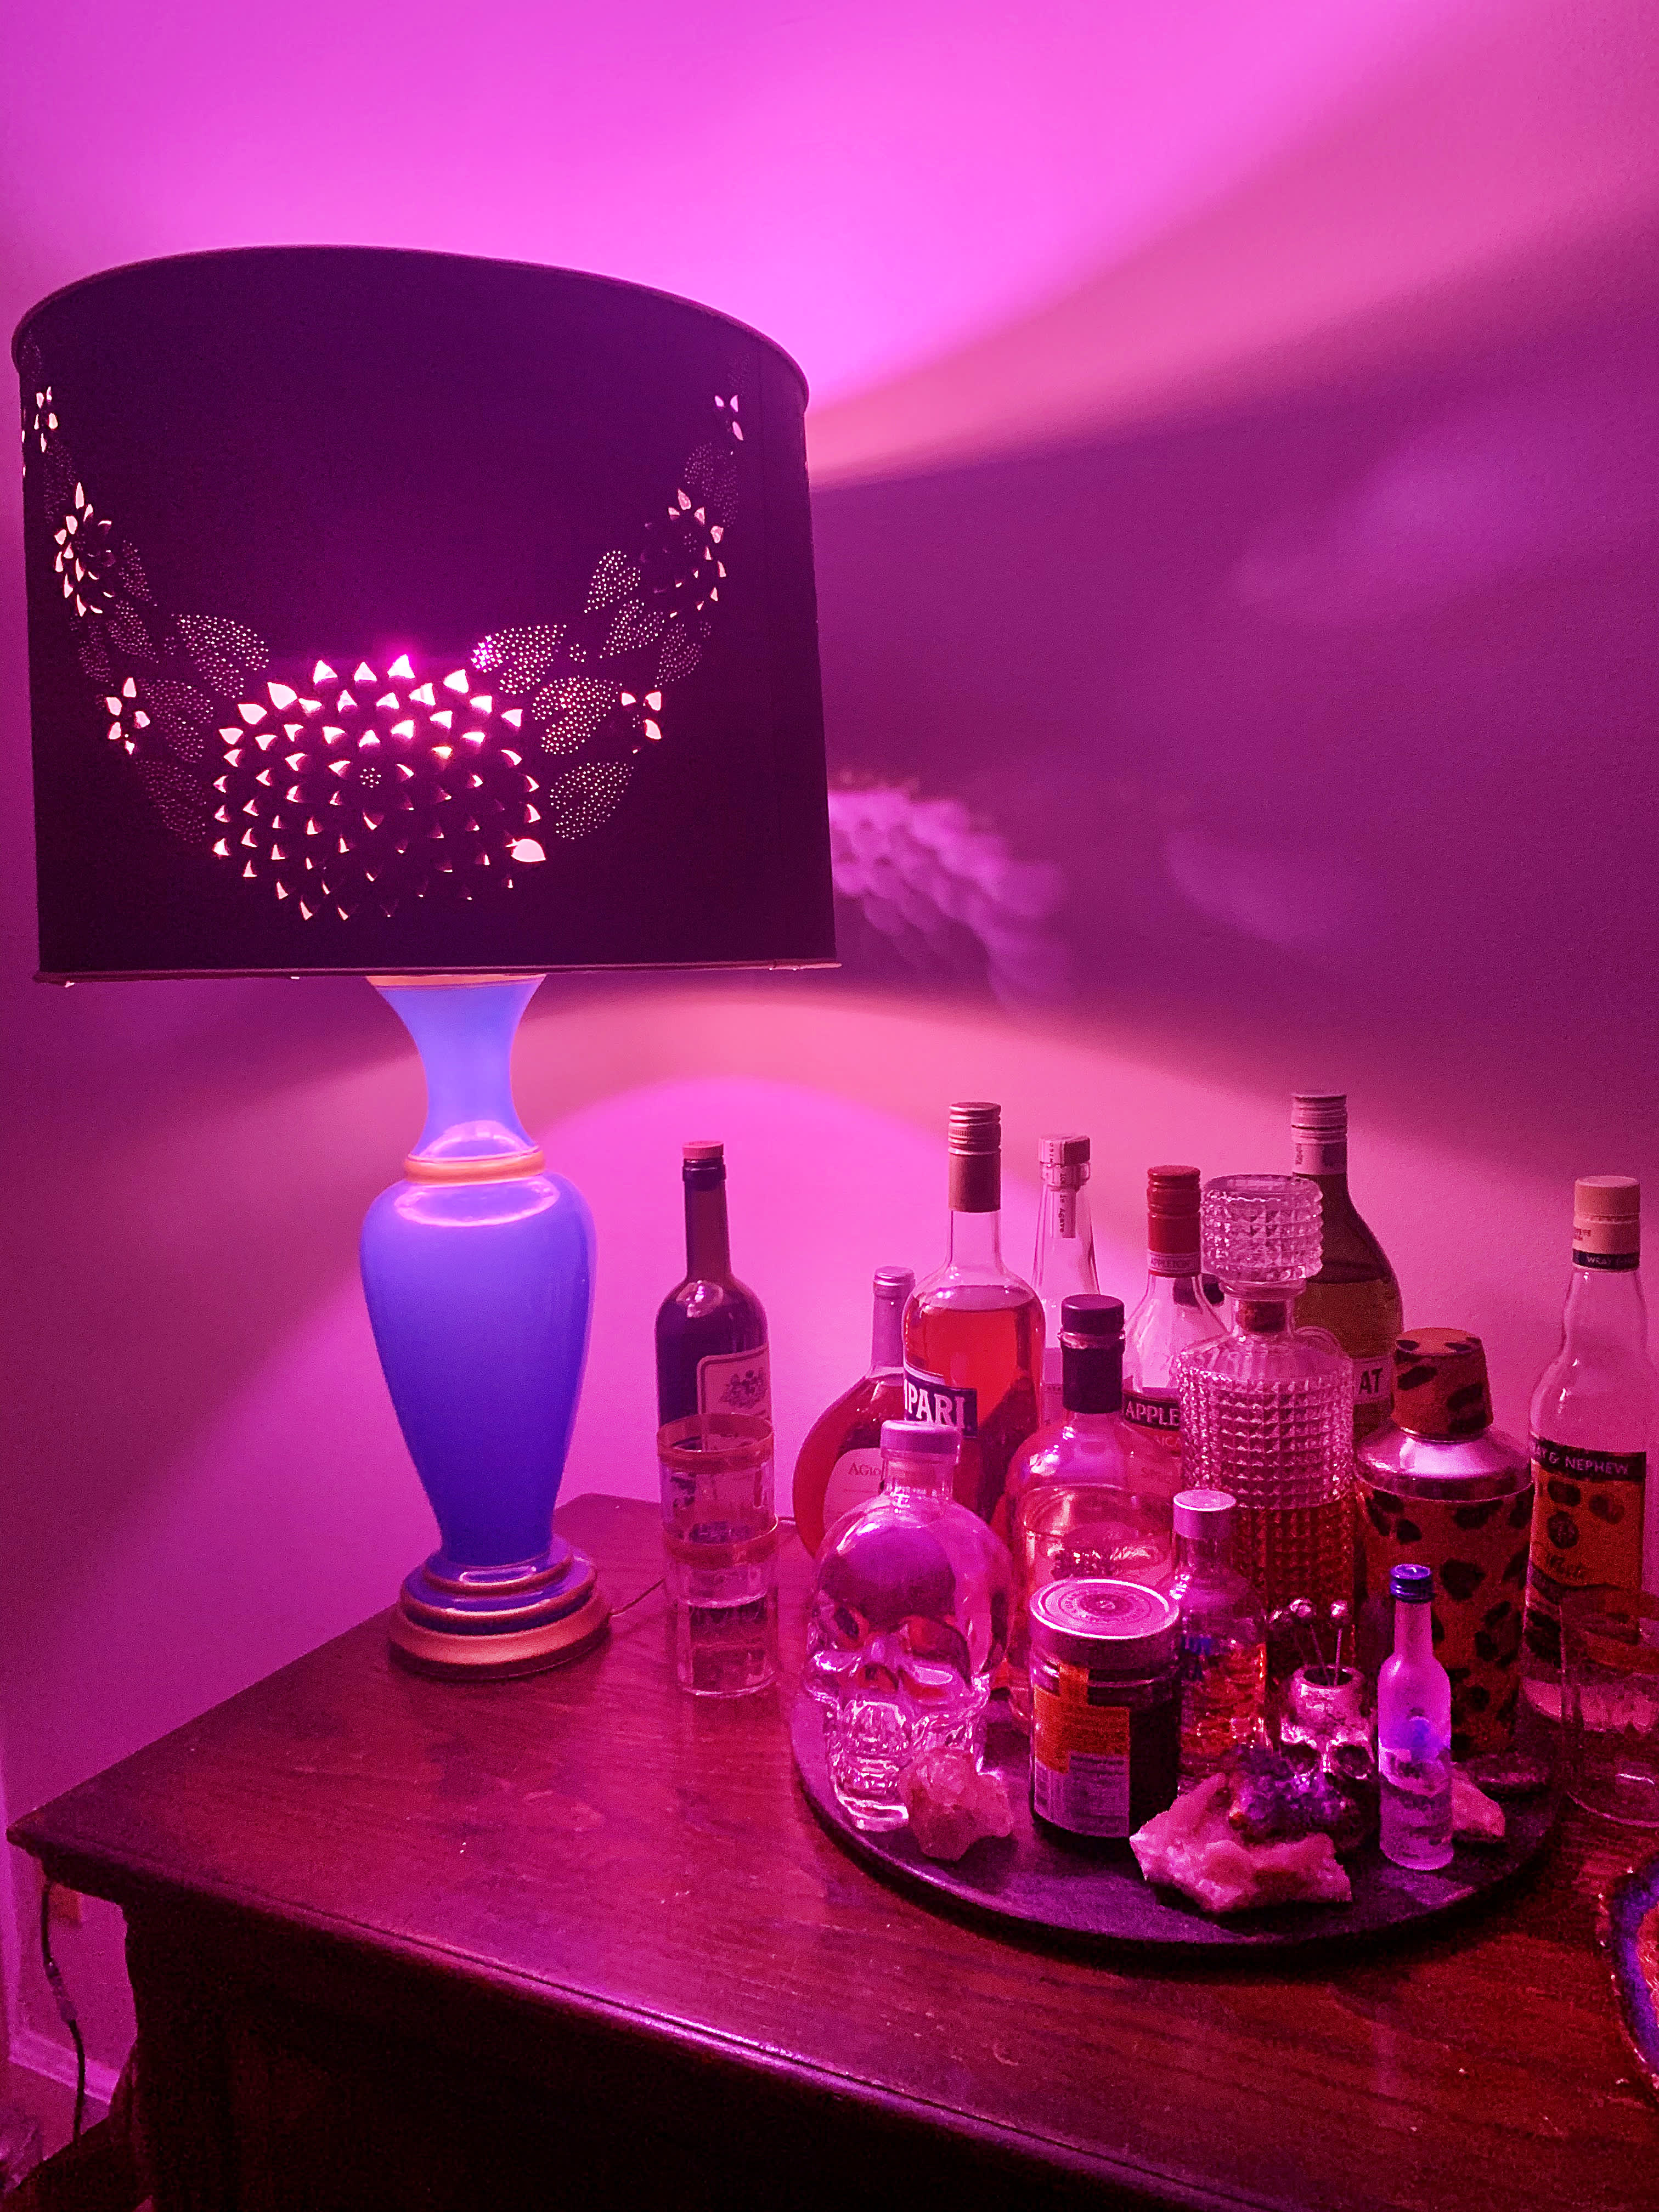 https://cdn.apartmenttherapy.info/image/upload/v1596467595/at/living/comfort-decorating/hali-pink-light-post.jpg